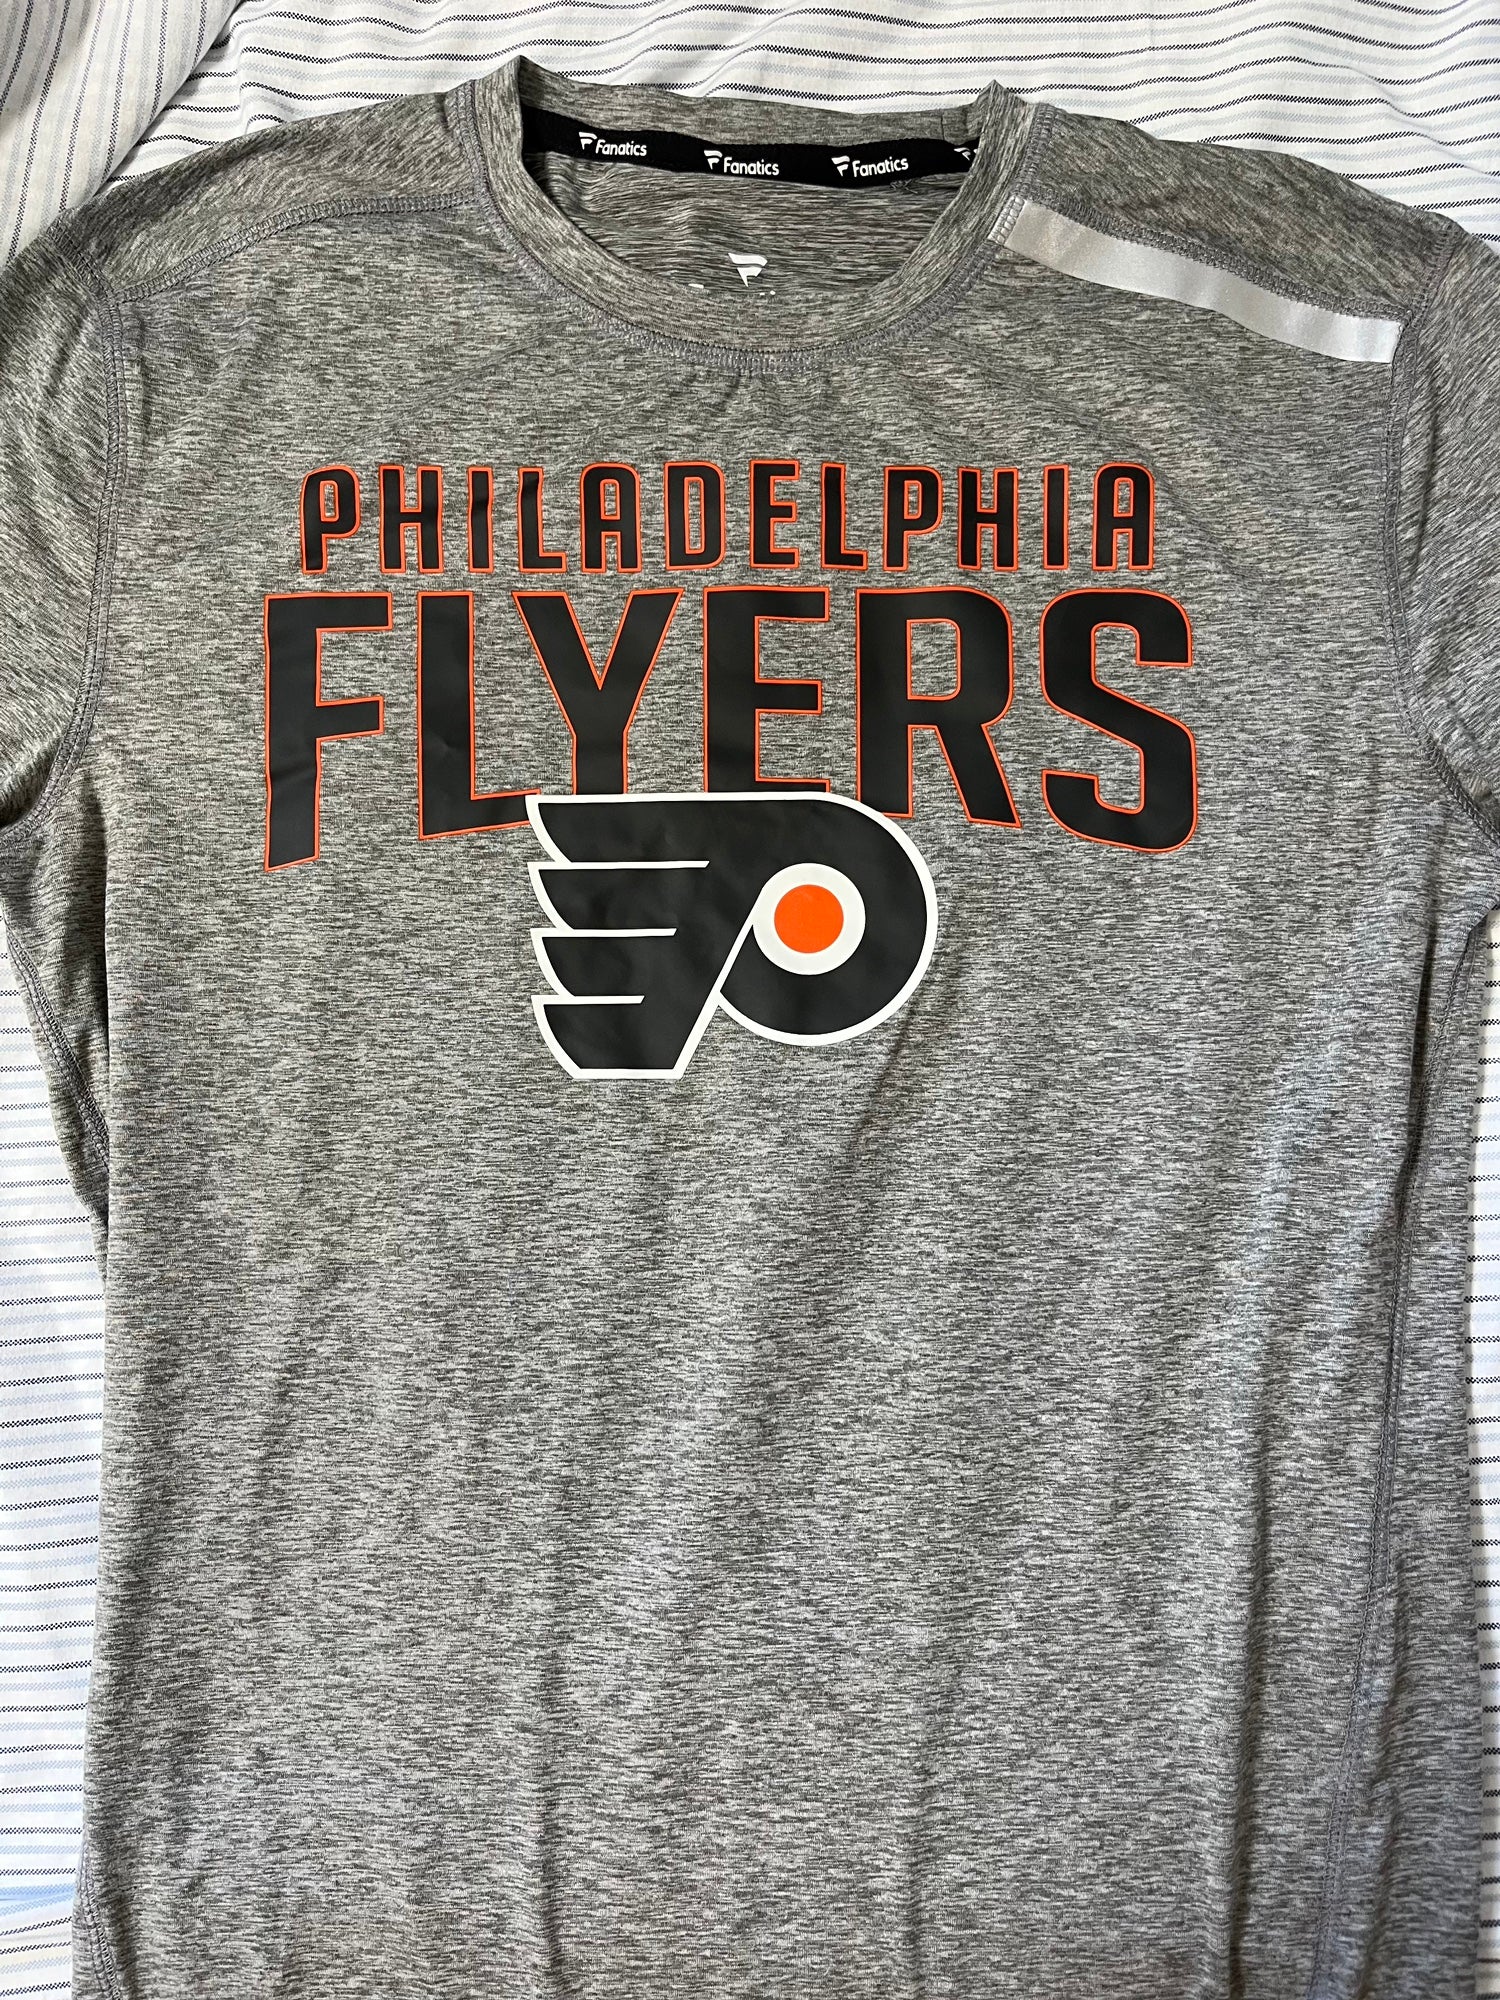 NHL Philadelphia Flyers Reverse Retro Special Edition Medium shirt